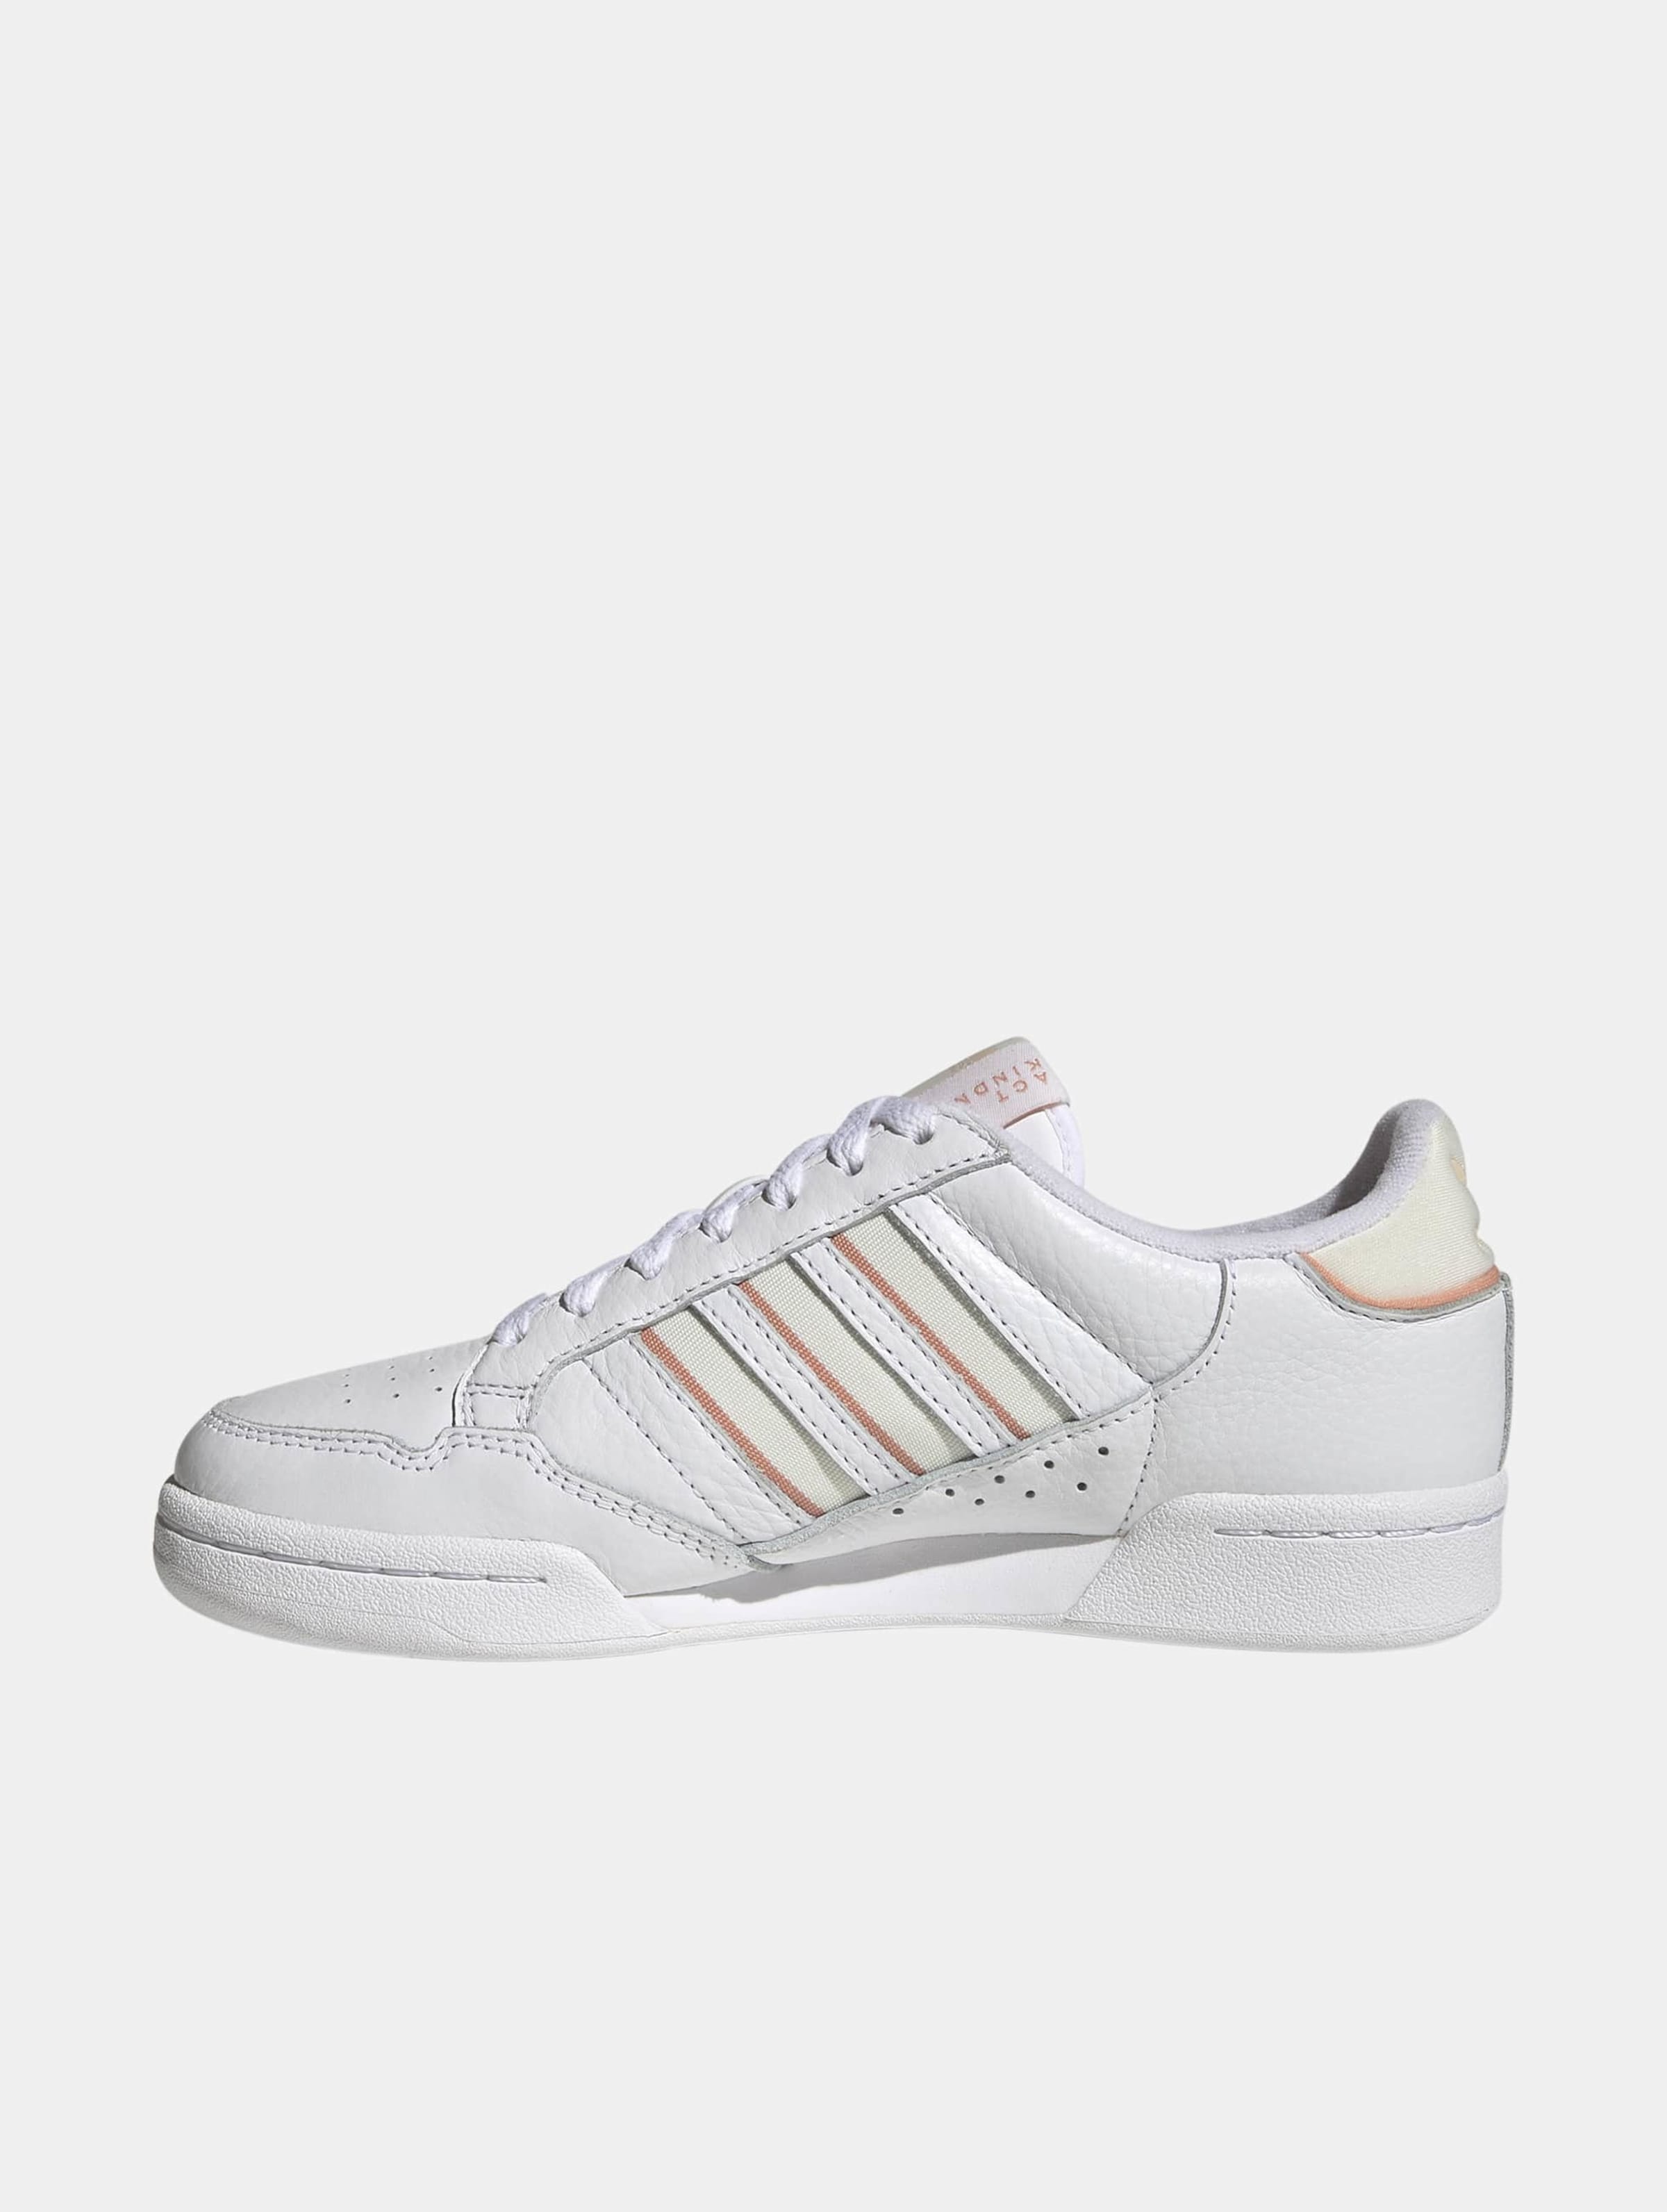 adidas Originals Adidas Continental 80 Stripes Schuhe Vrouwen op kleur wit, Maat 35.5